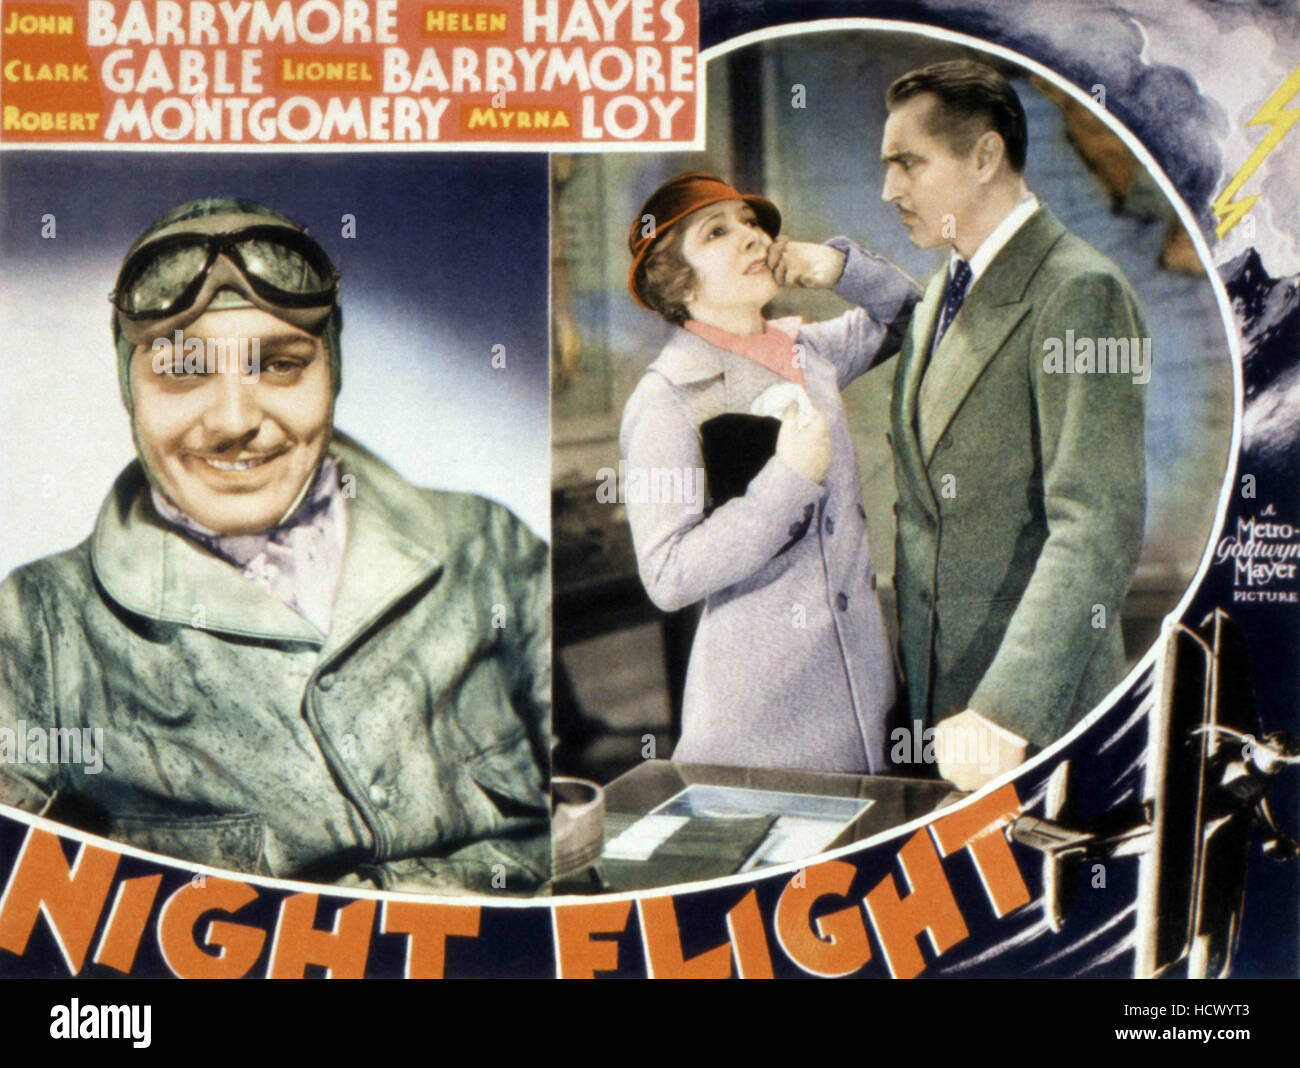 NIGHT FLIGHT, Clark Gable, Helen Hayes, John Barrymore, 1933 Stock ...